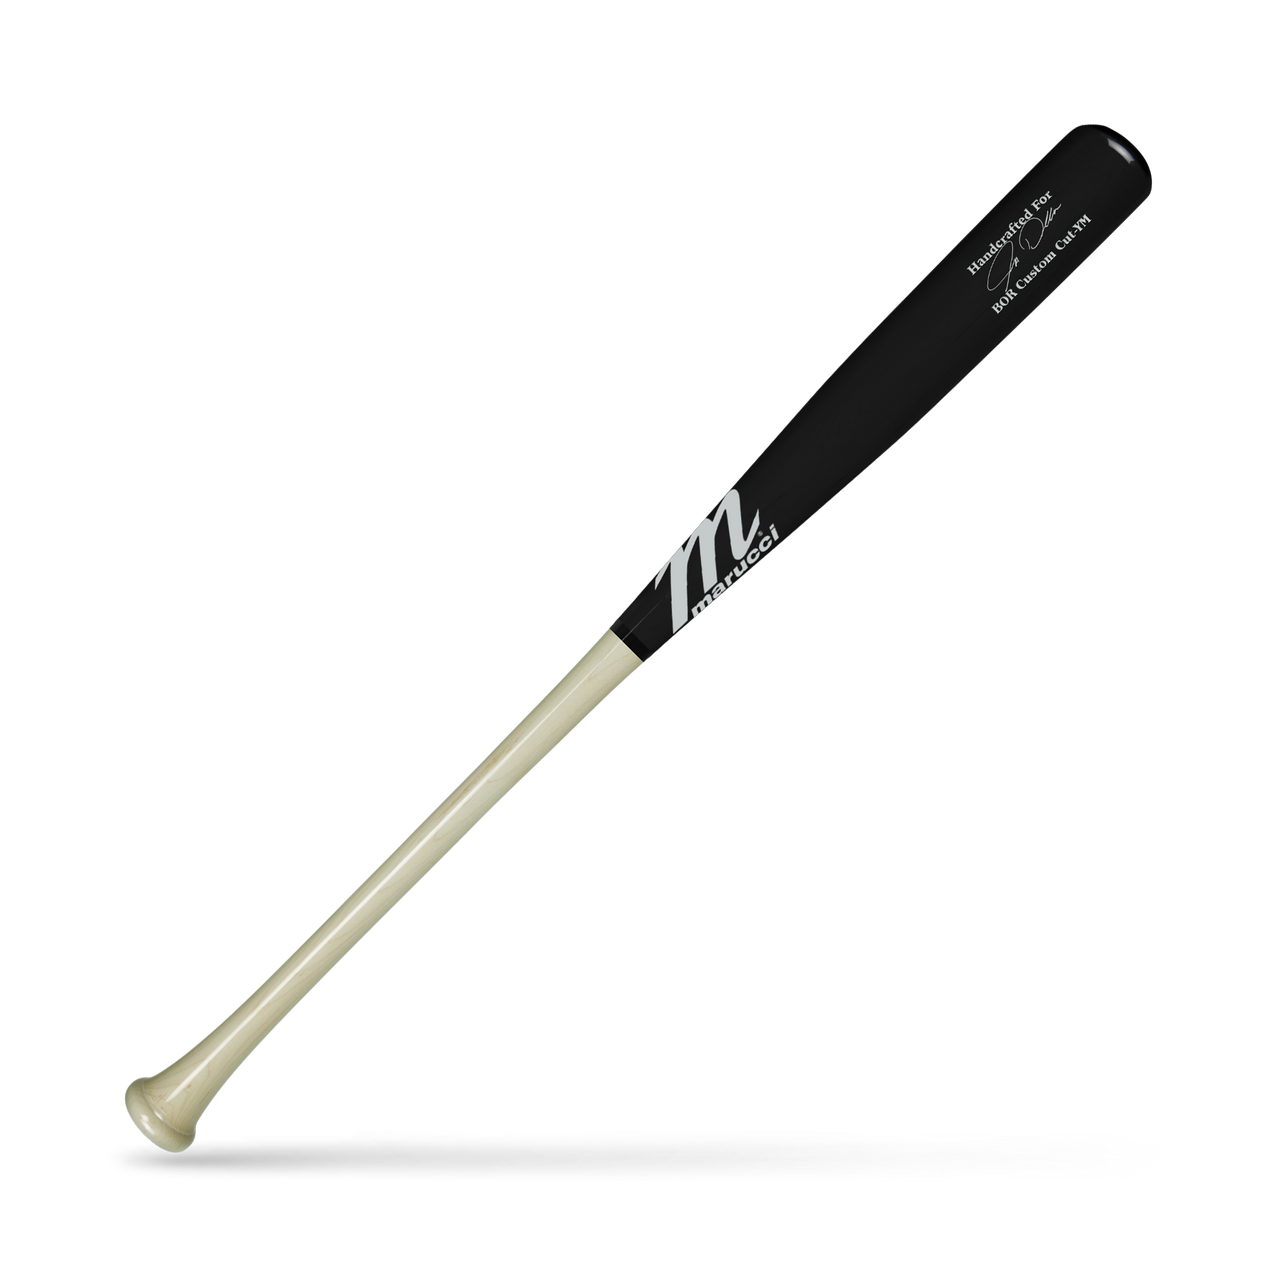 marucci-bringer-of-rain-youth-model-natural-black-wood-baseball-bat-31-inch MYVE3BOR-NBK-31 Marucci  The Marucci Josh Donaldson Bringer of Rain Pro Model Bat is